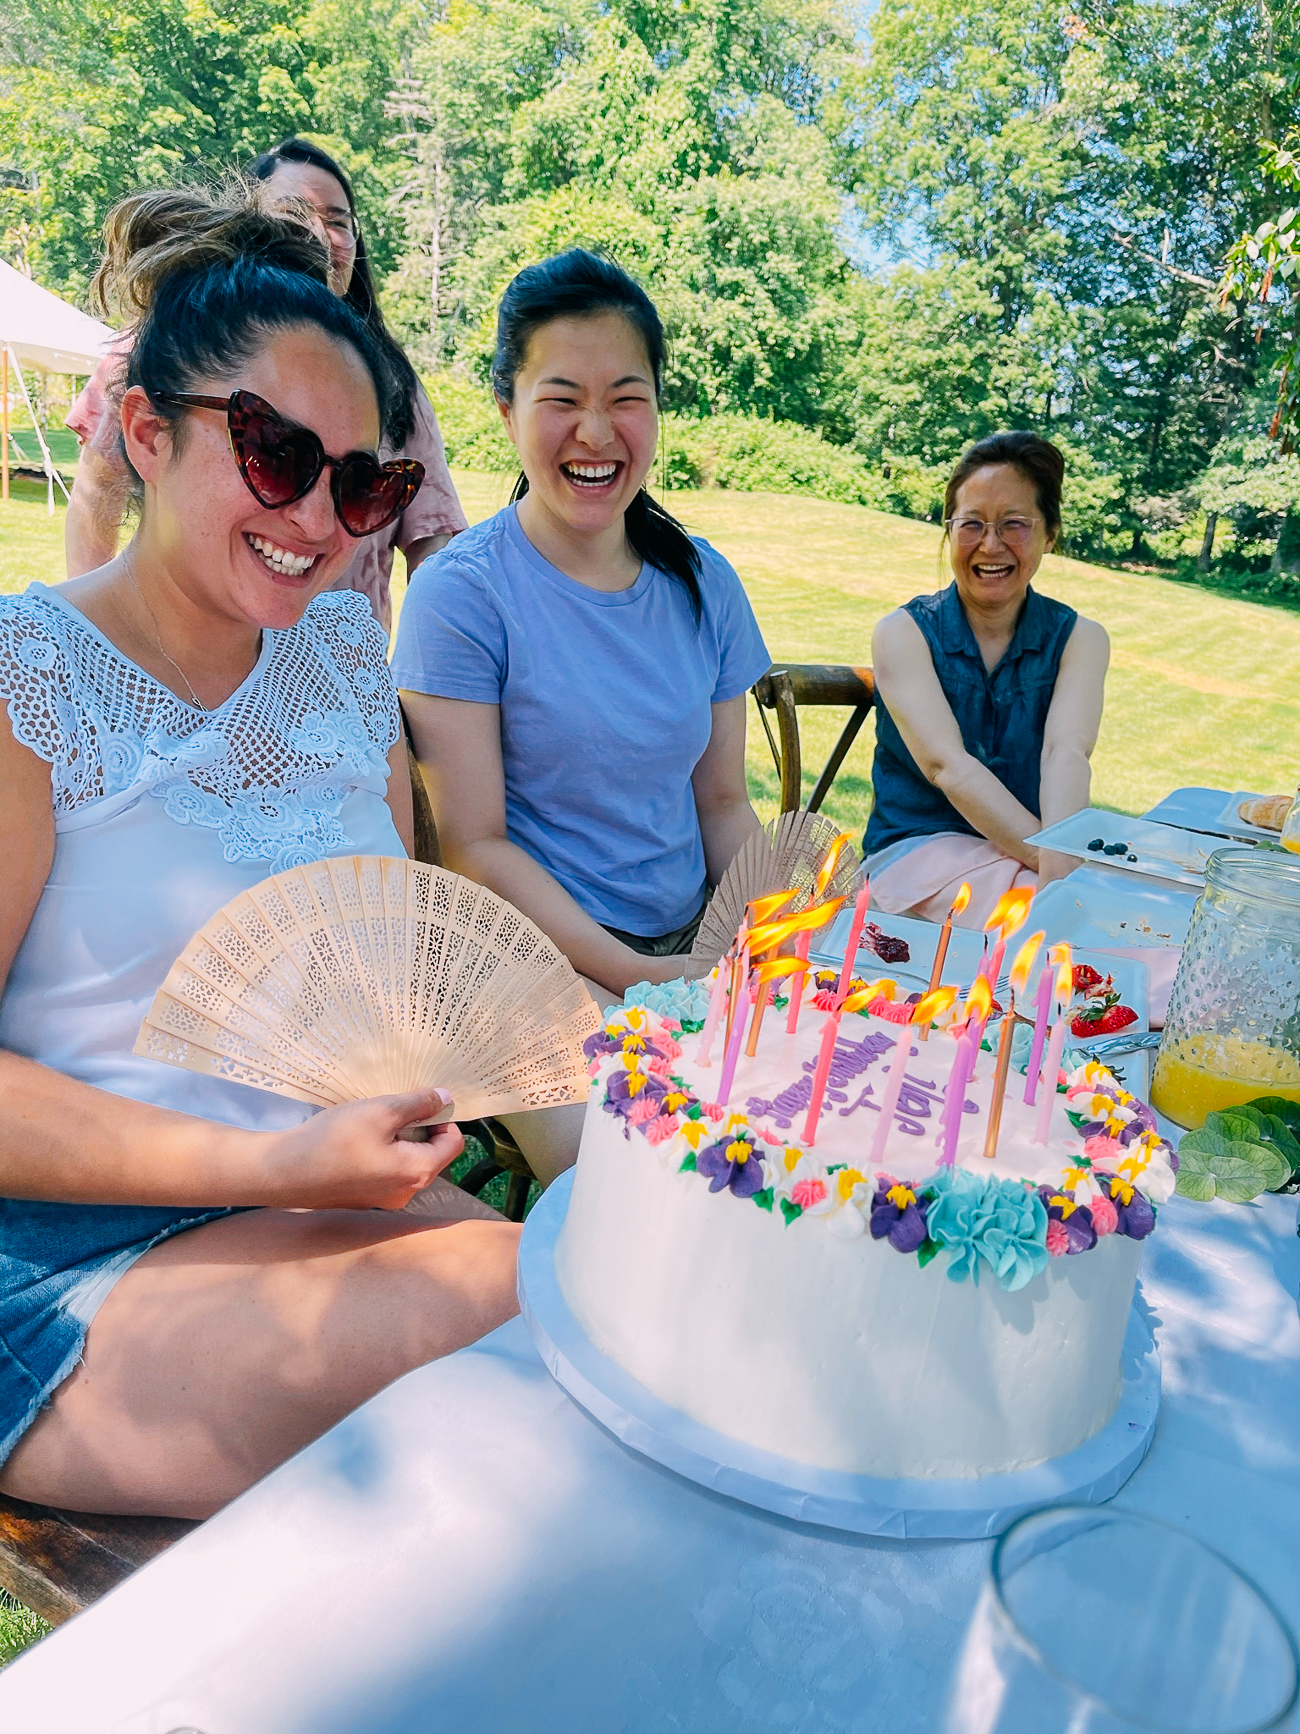 Jen's birthday cake